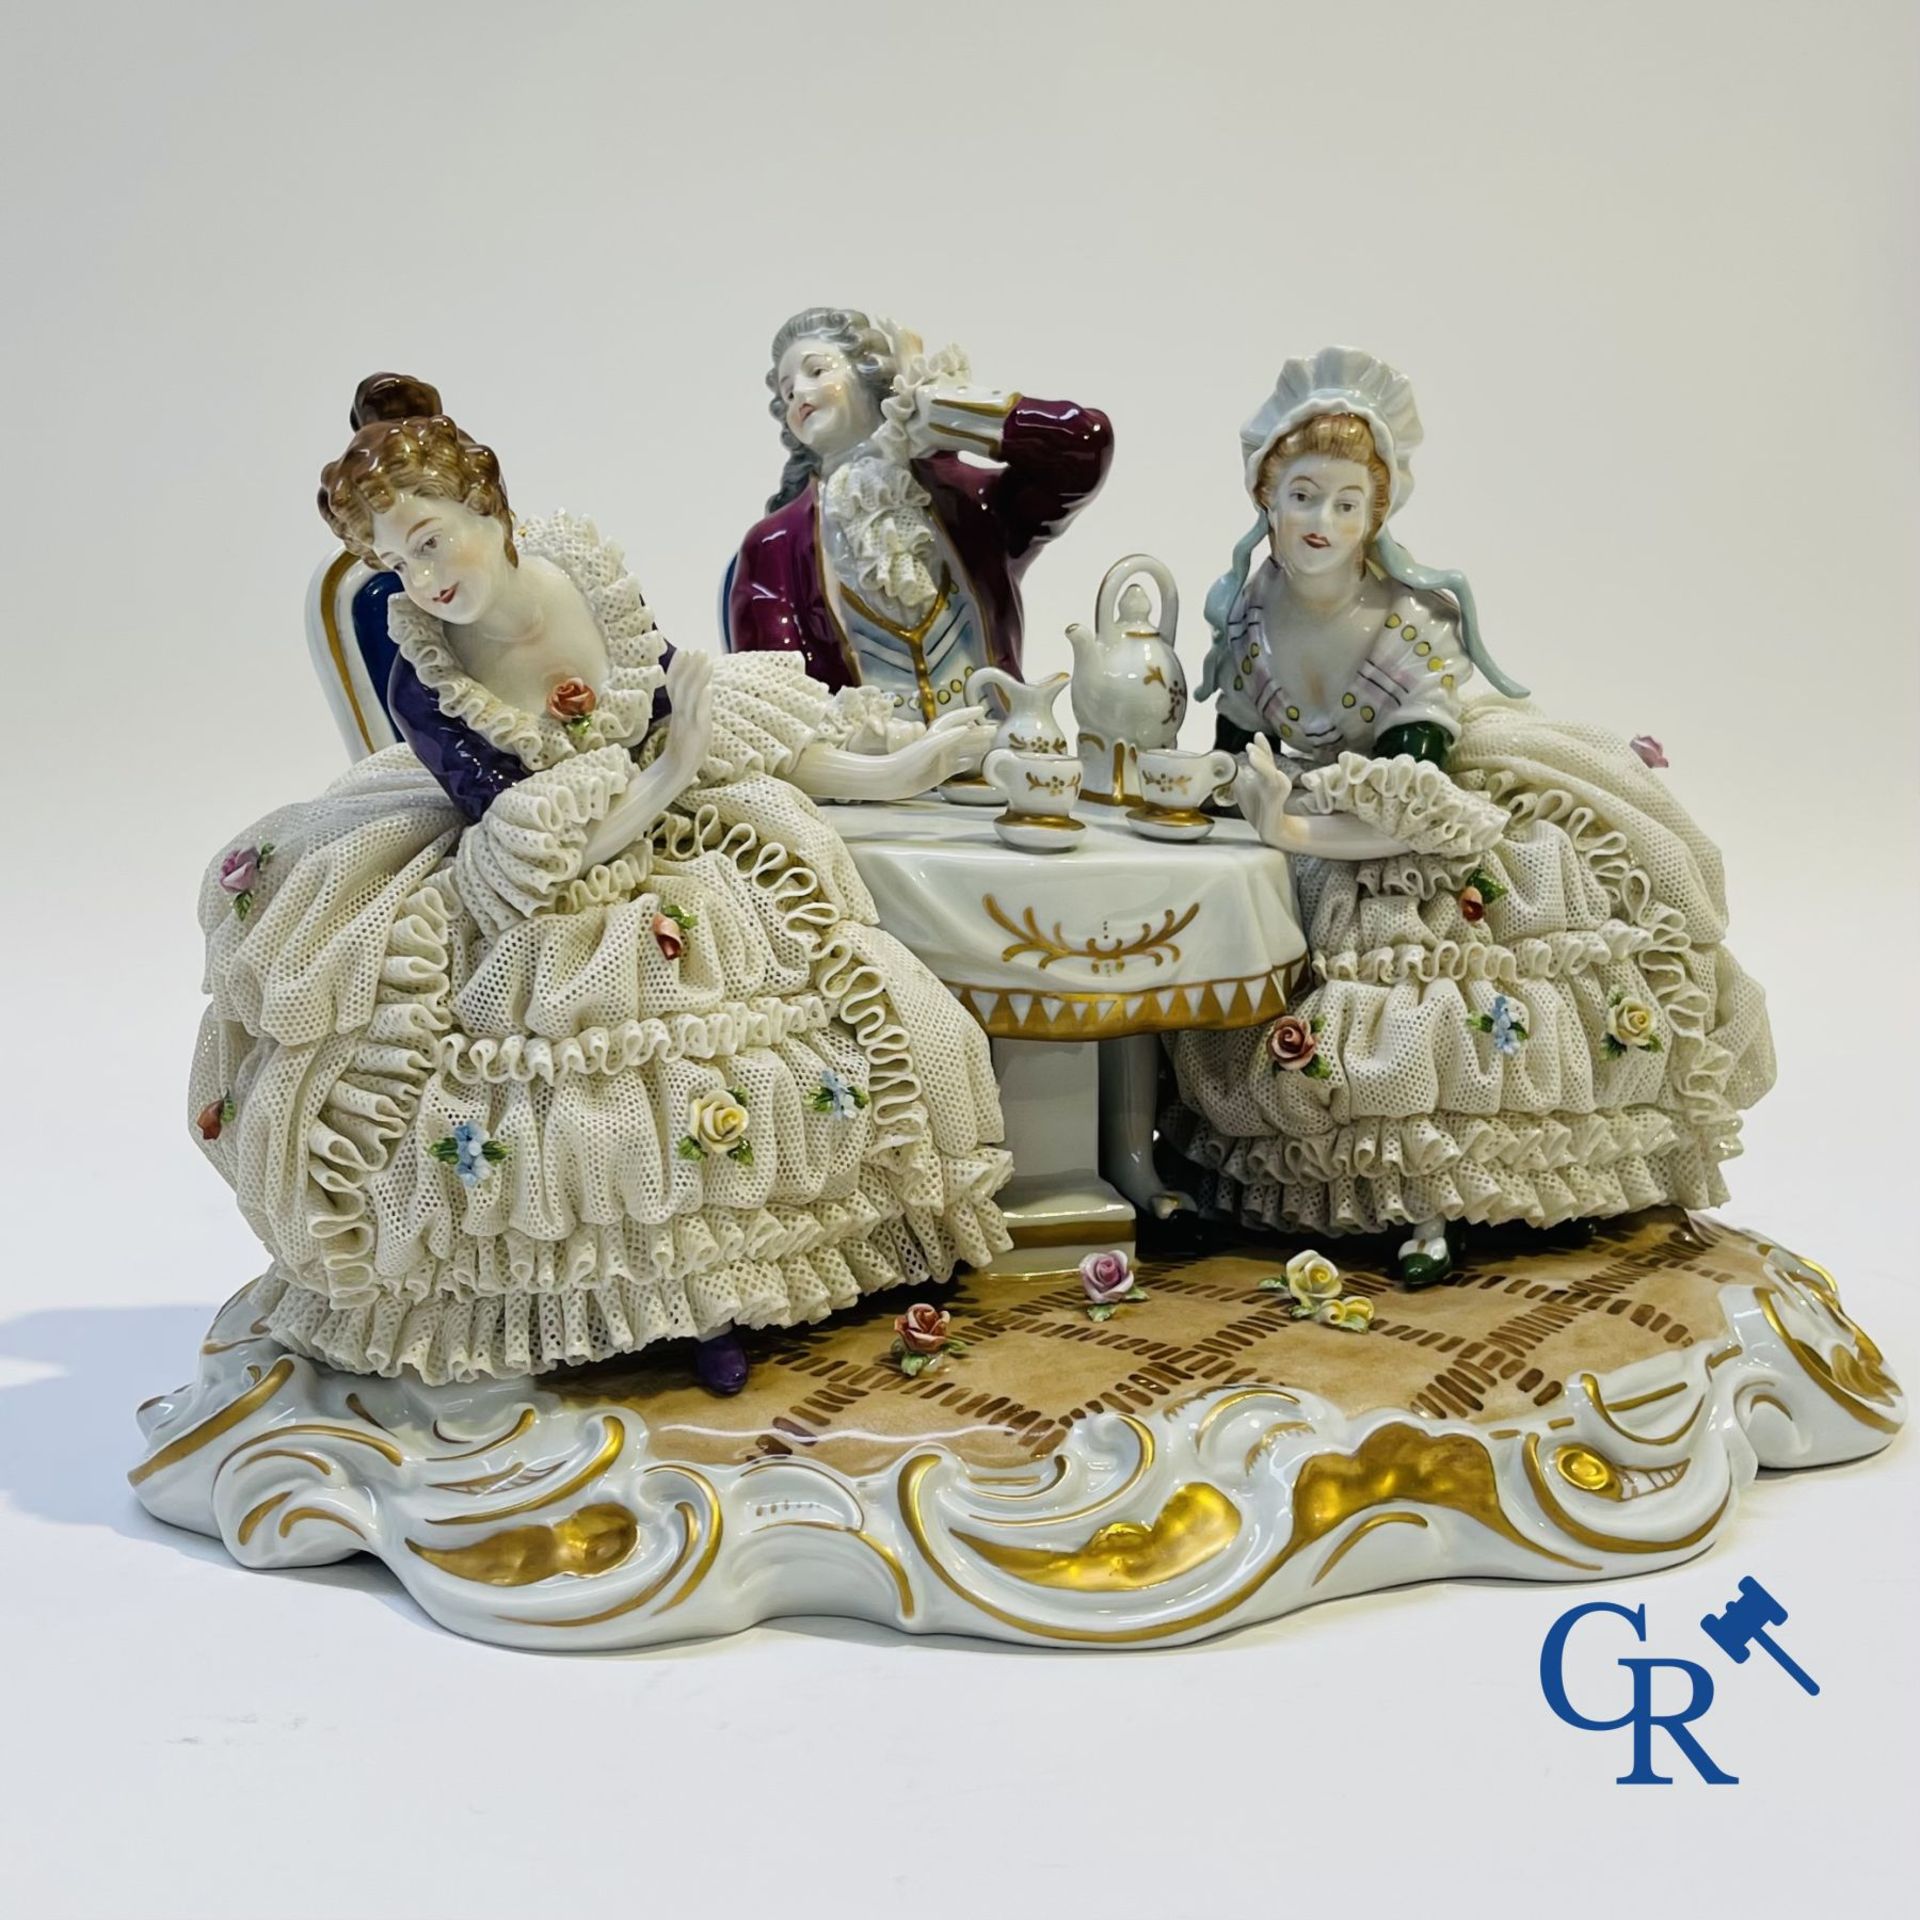 Porcelain: Unterweissbach: "In the tea room".